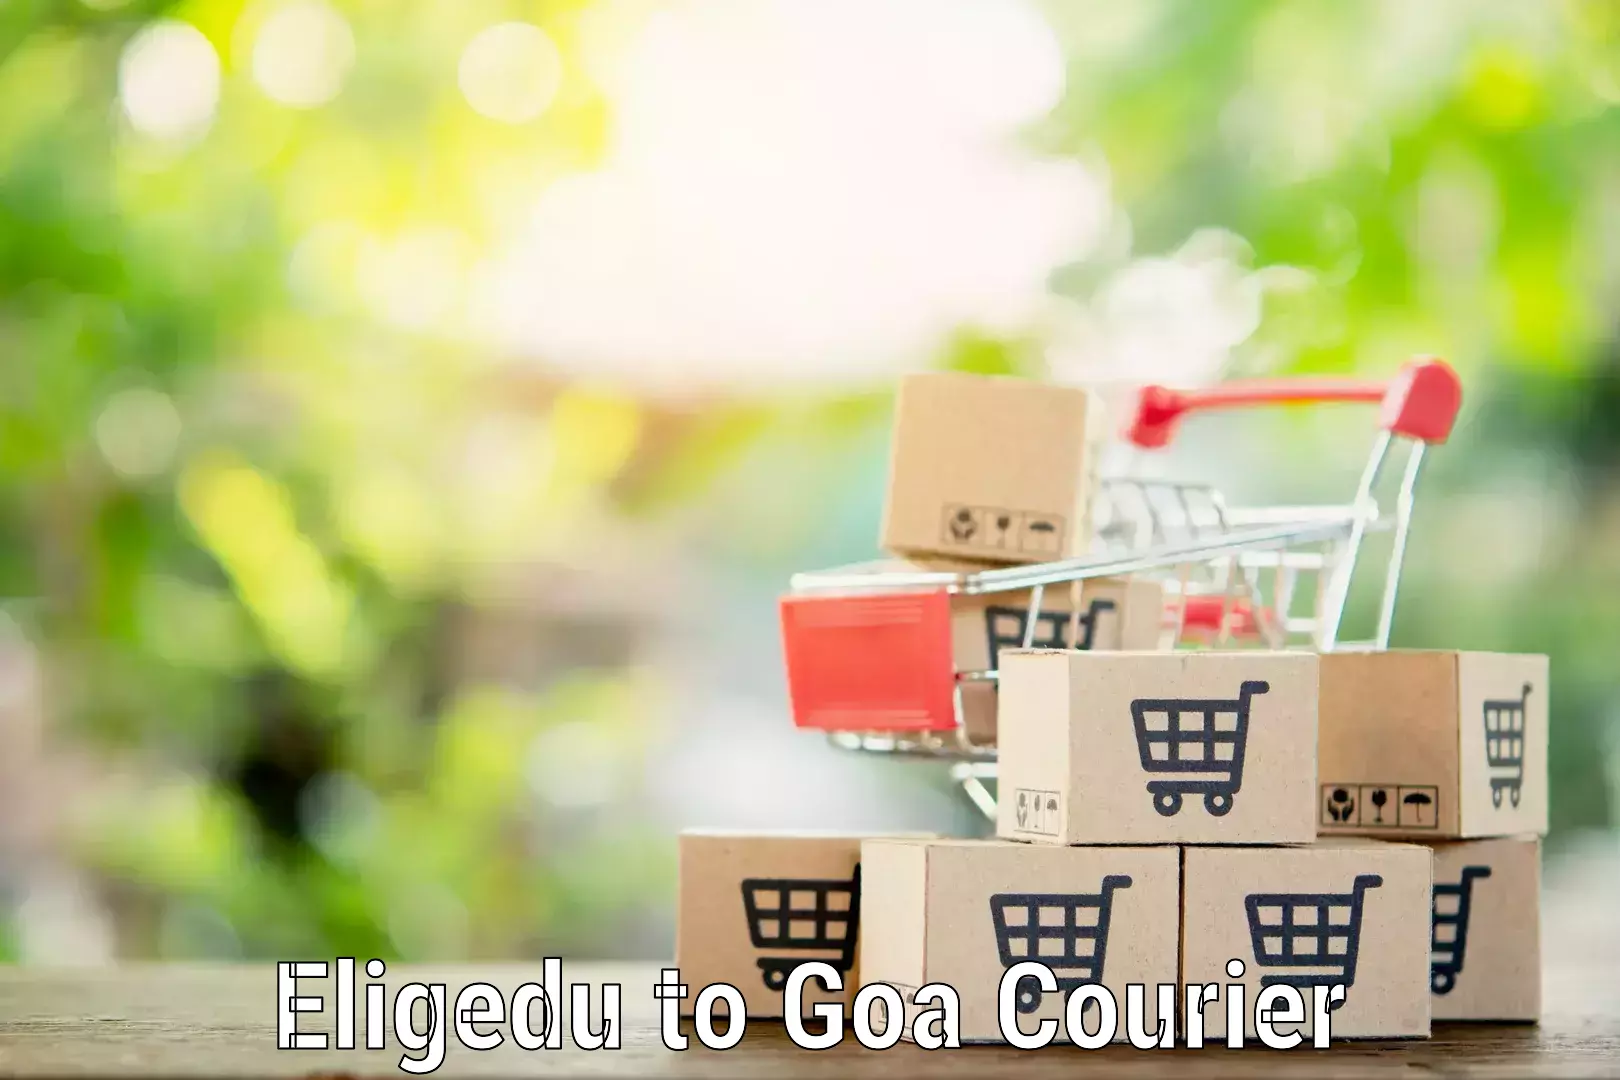 Professional moving company Eligedu to Goa